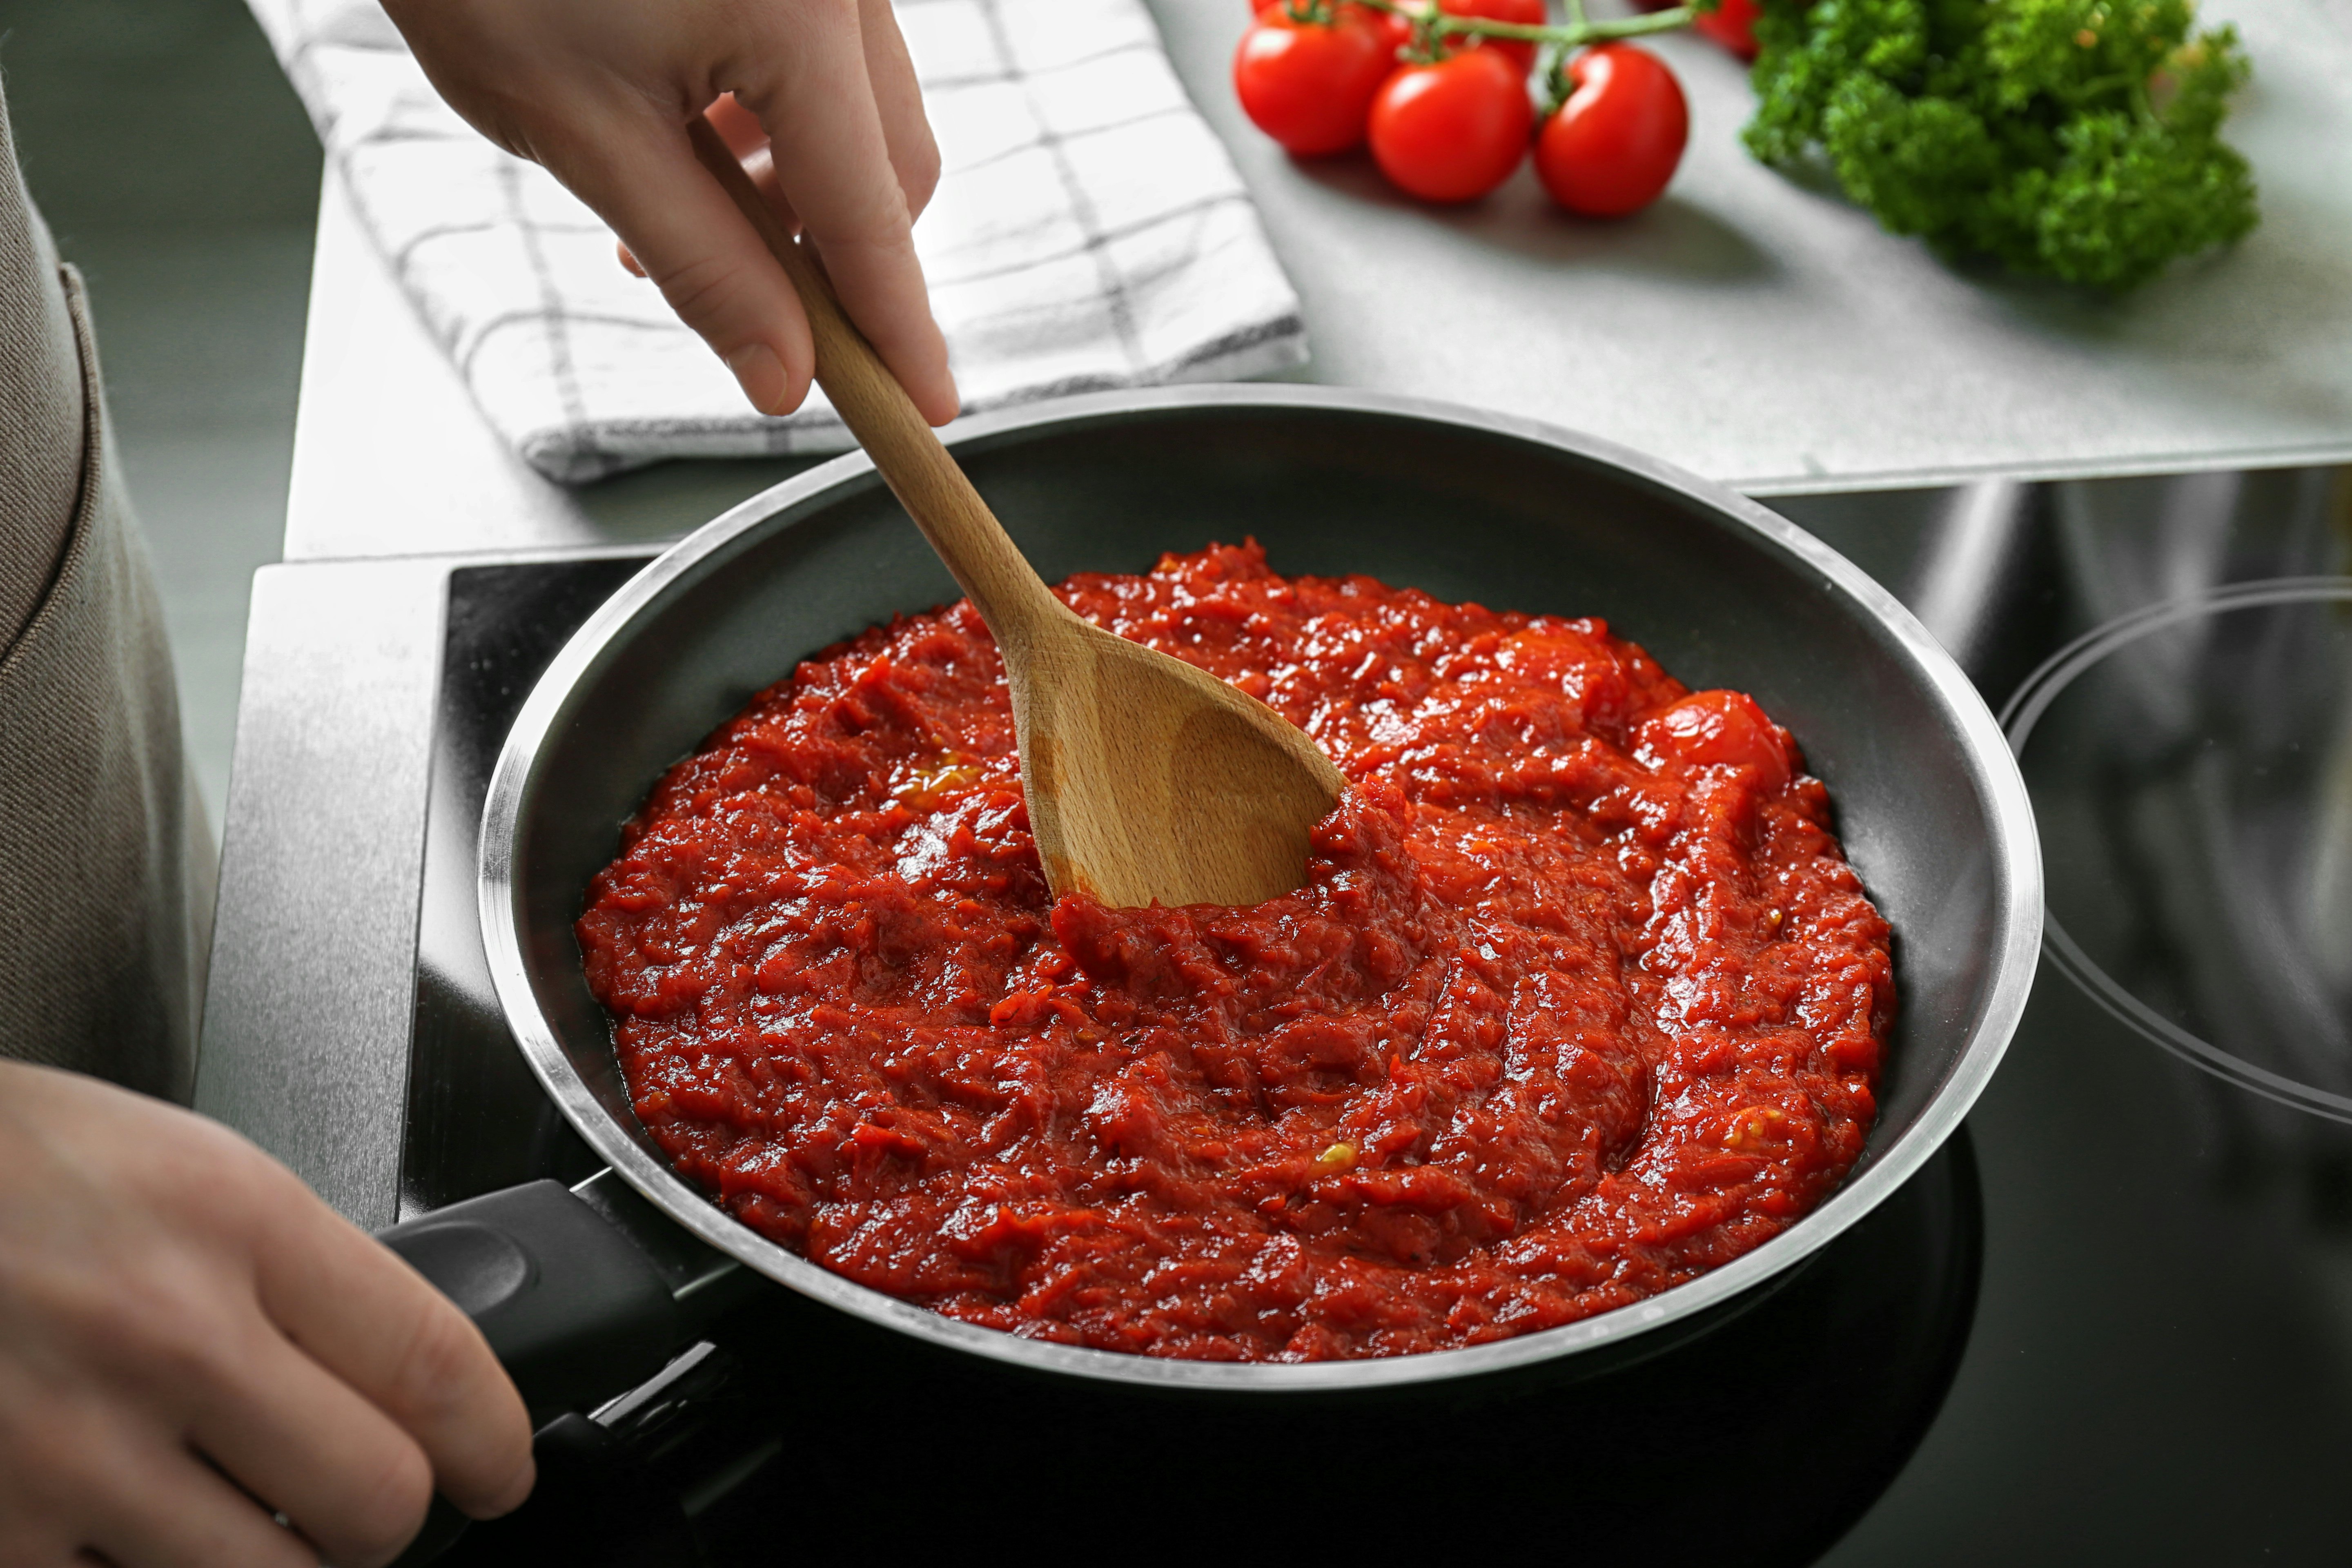 plain pasta sauce no chunks of tomato